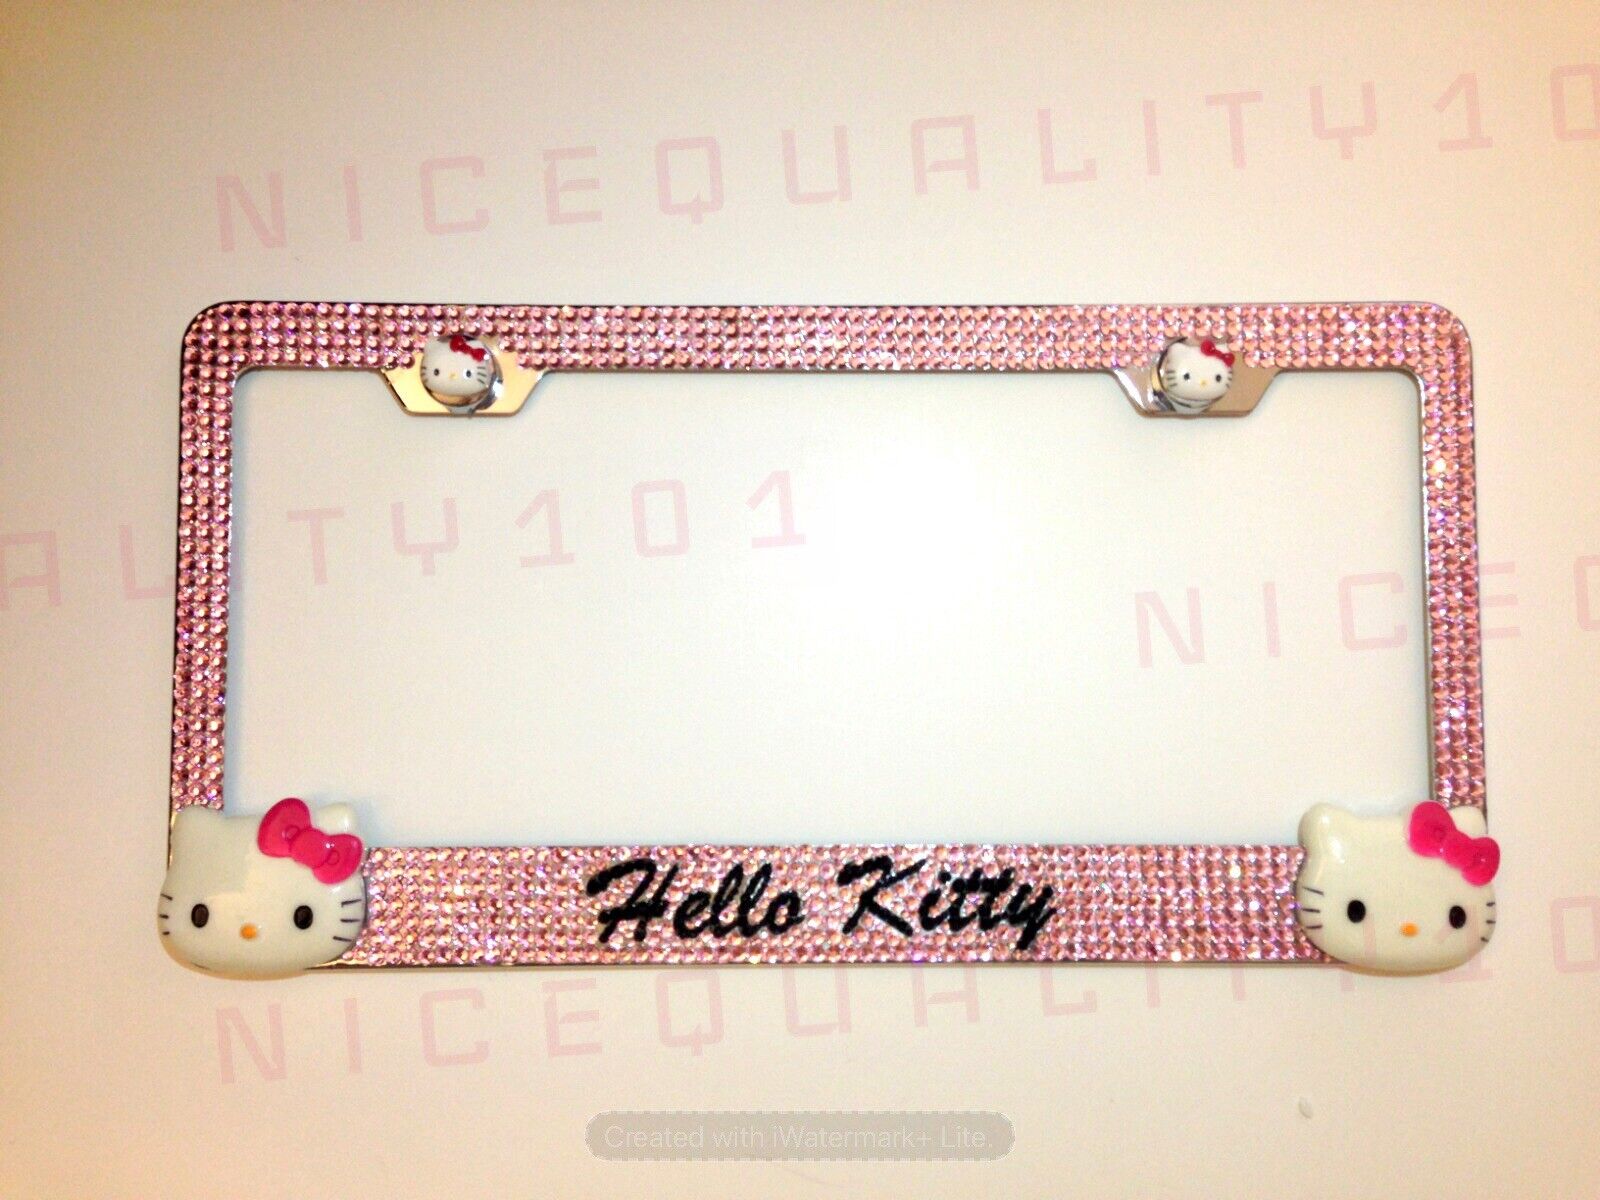 Hello Kitty License Plate Frame Holder Made with Swarovski Crystals